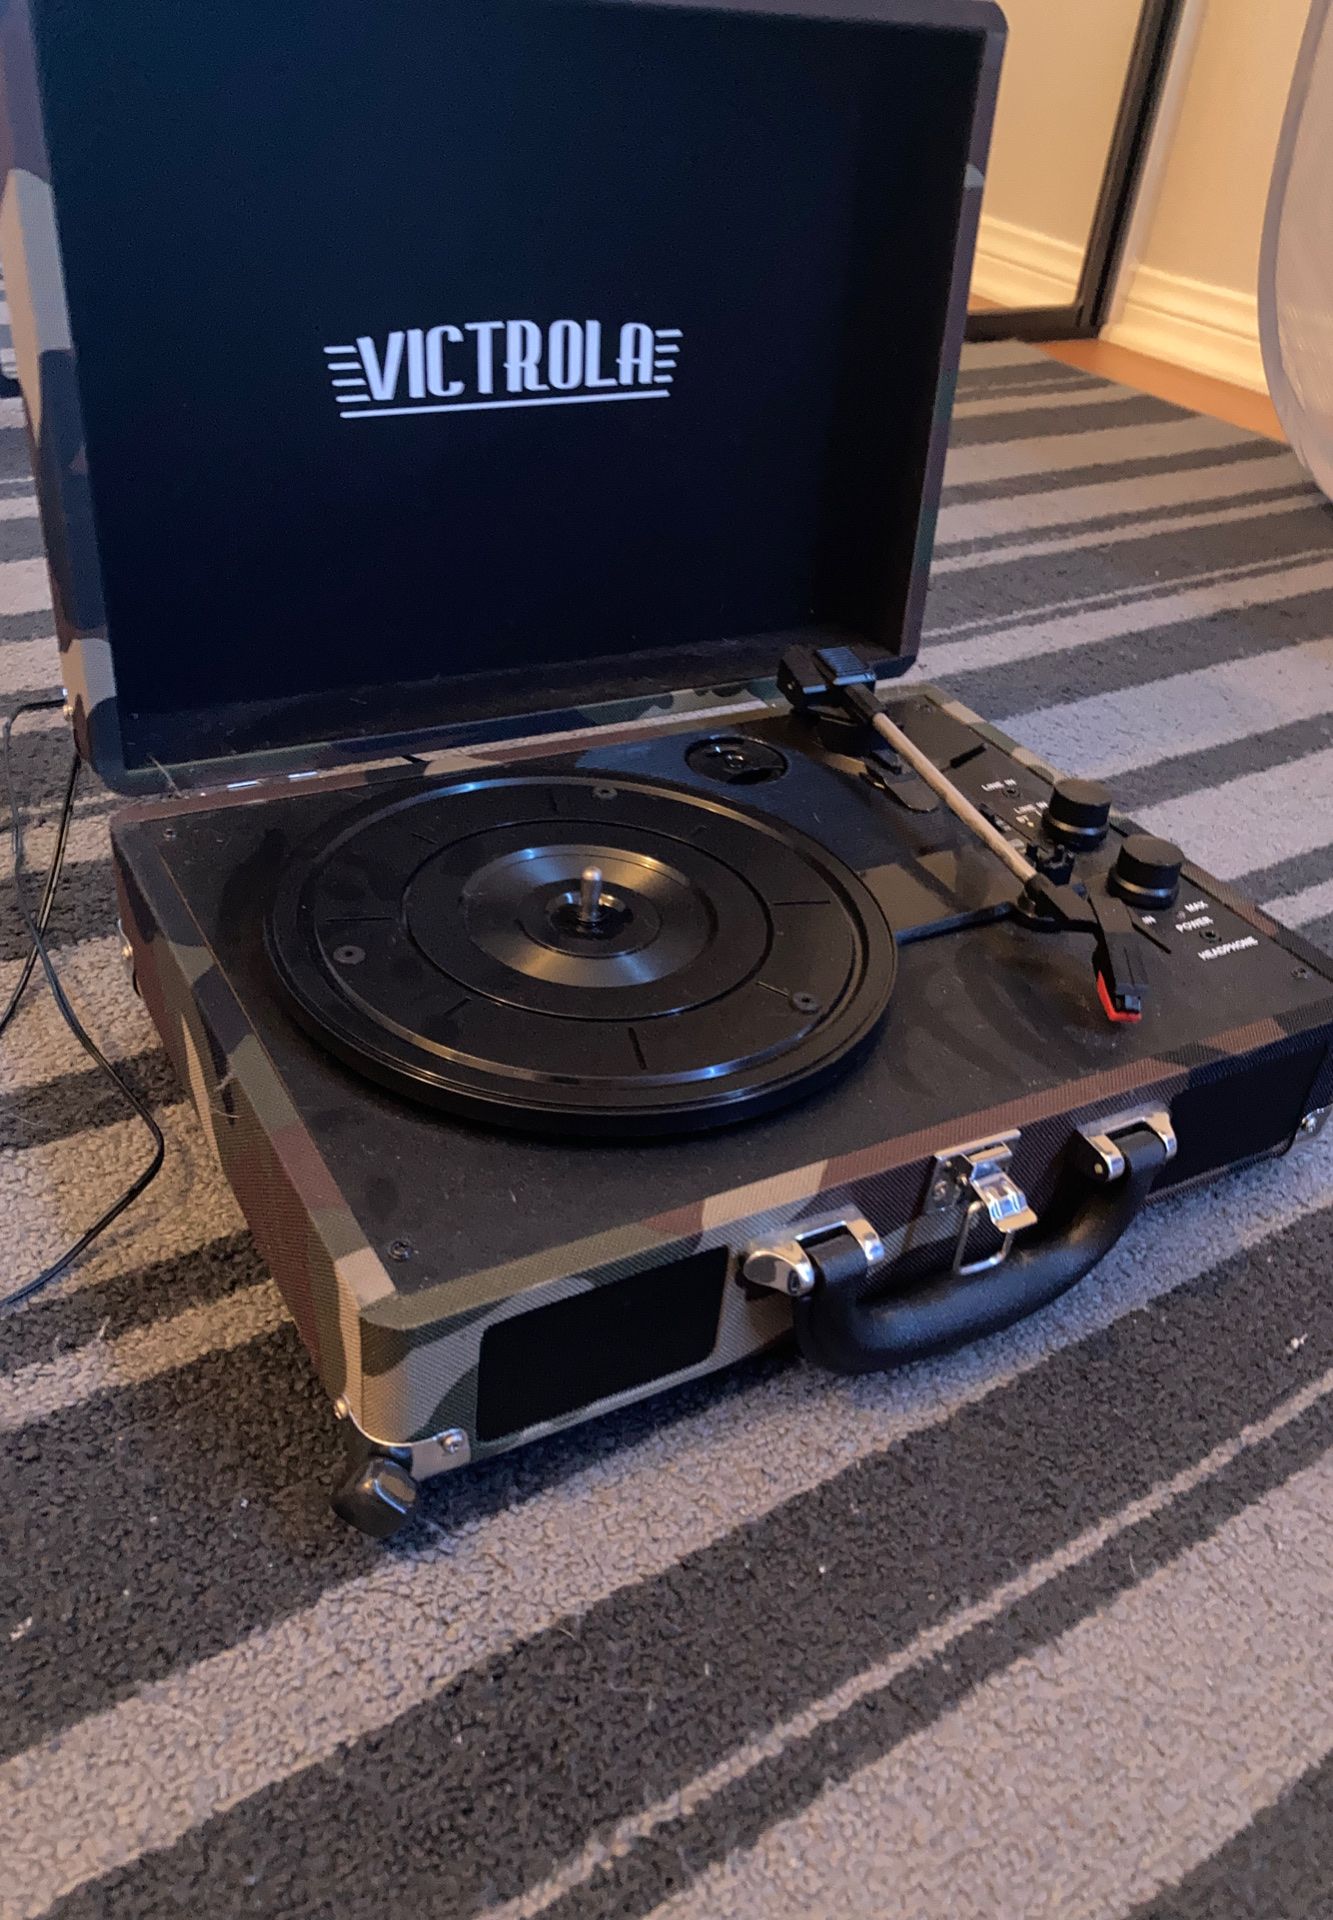 Victrola record player/Bluetooth speaker